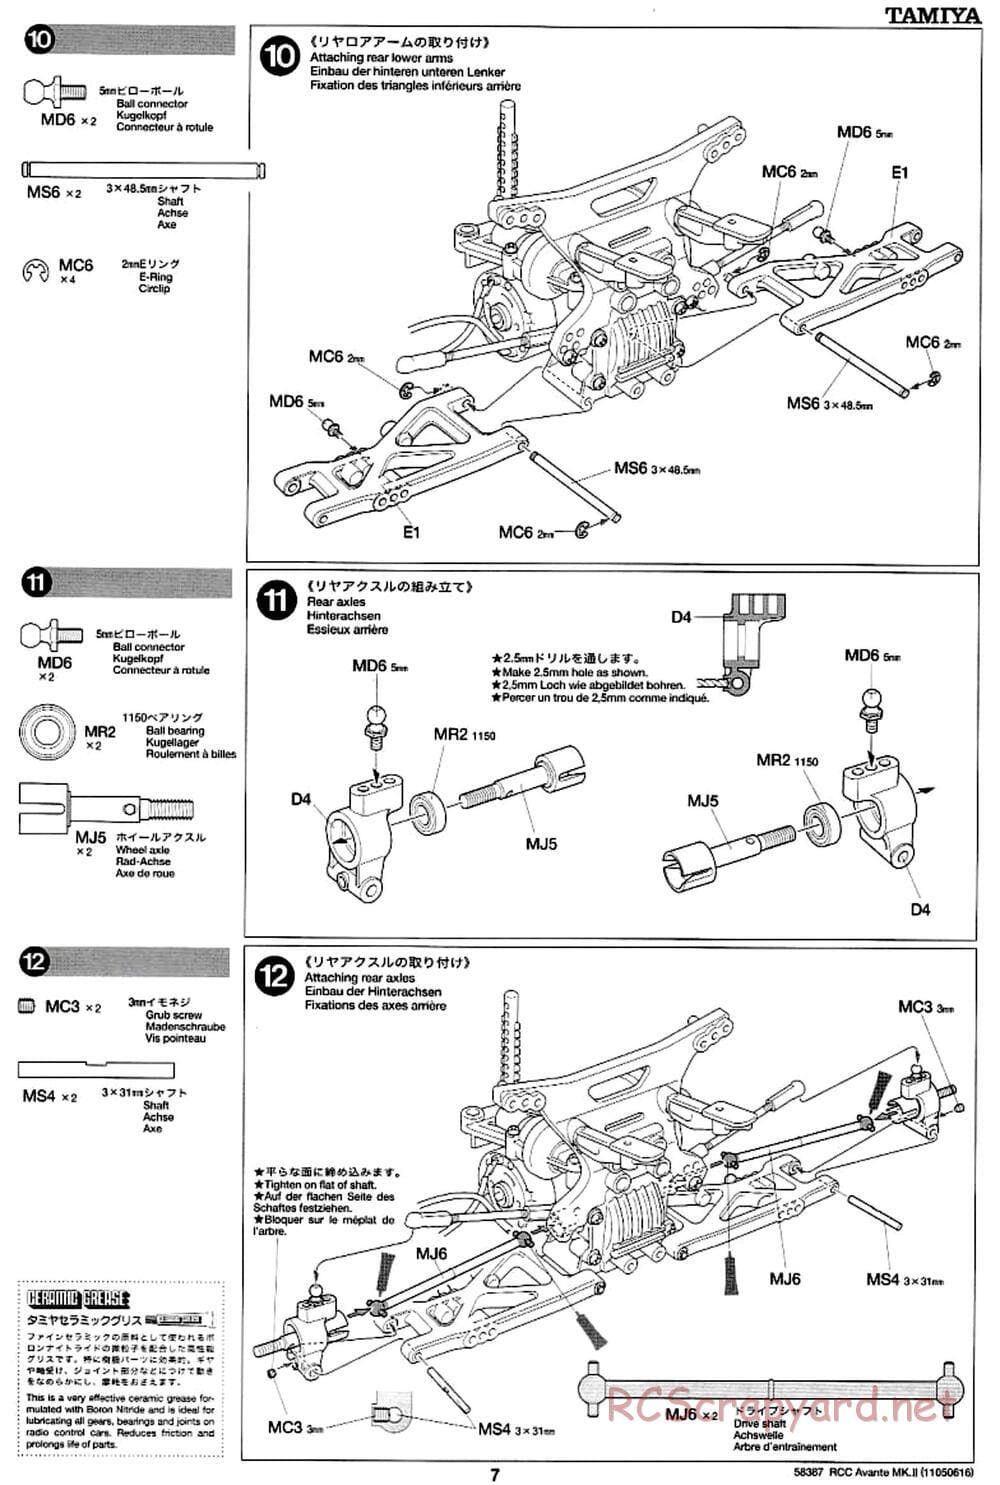 Tamiya - Avante Mk.II Chassis - Manual - Page 7